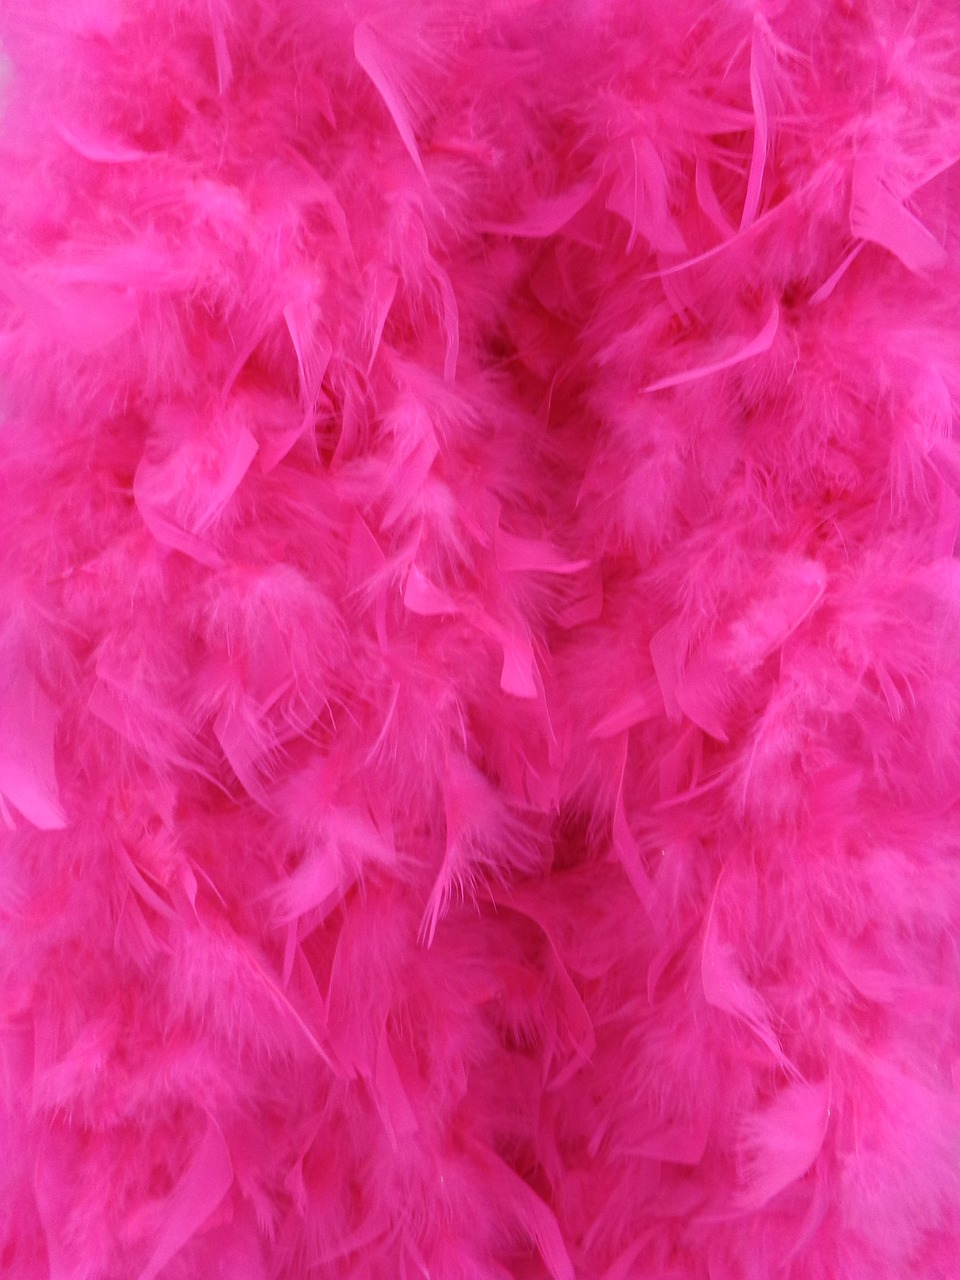 background pink fluffy free photo